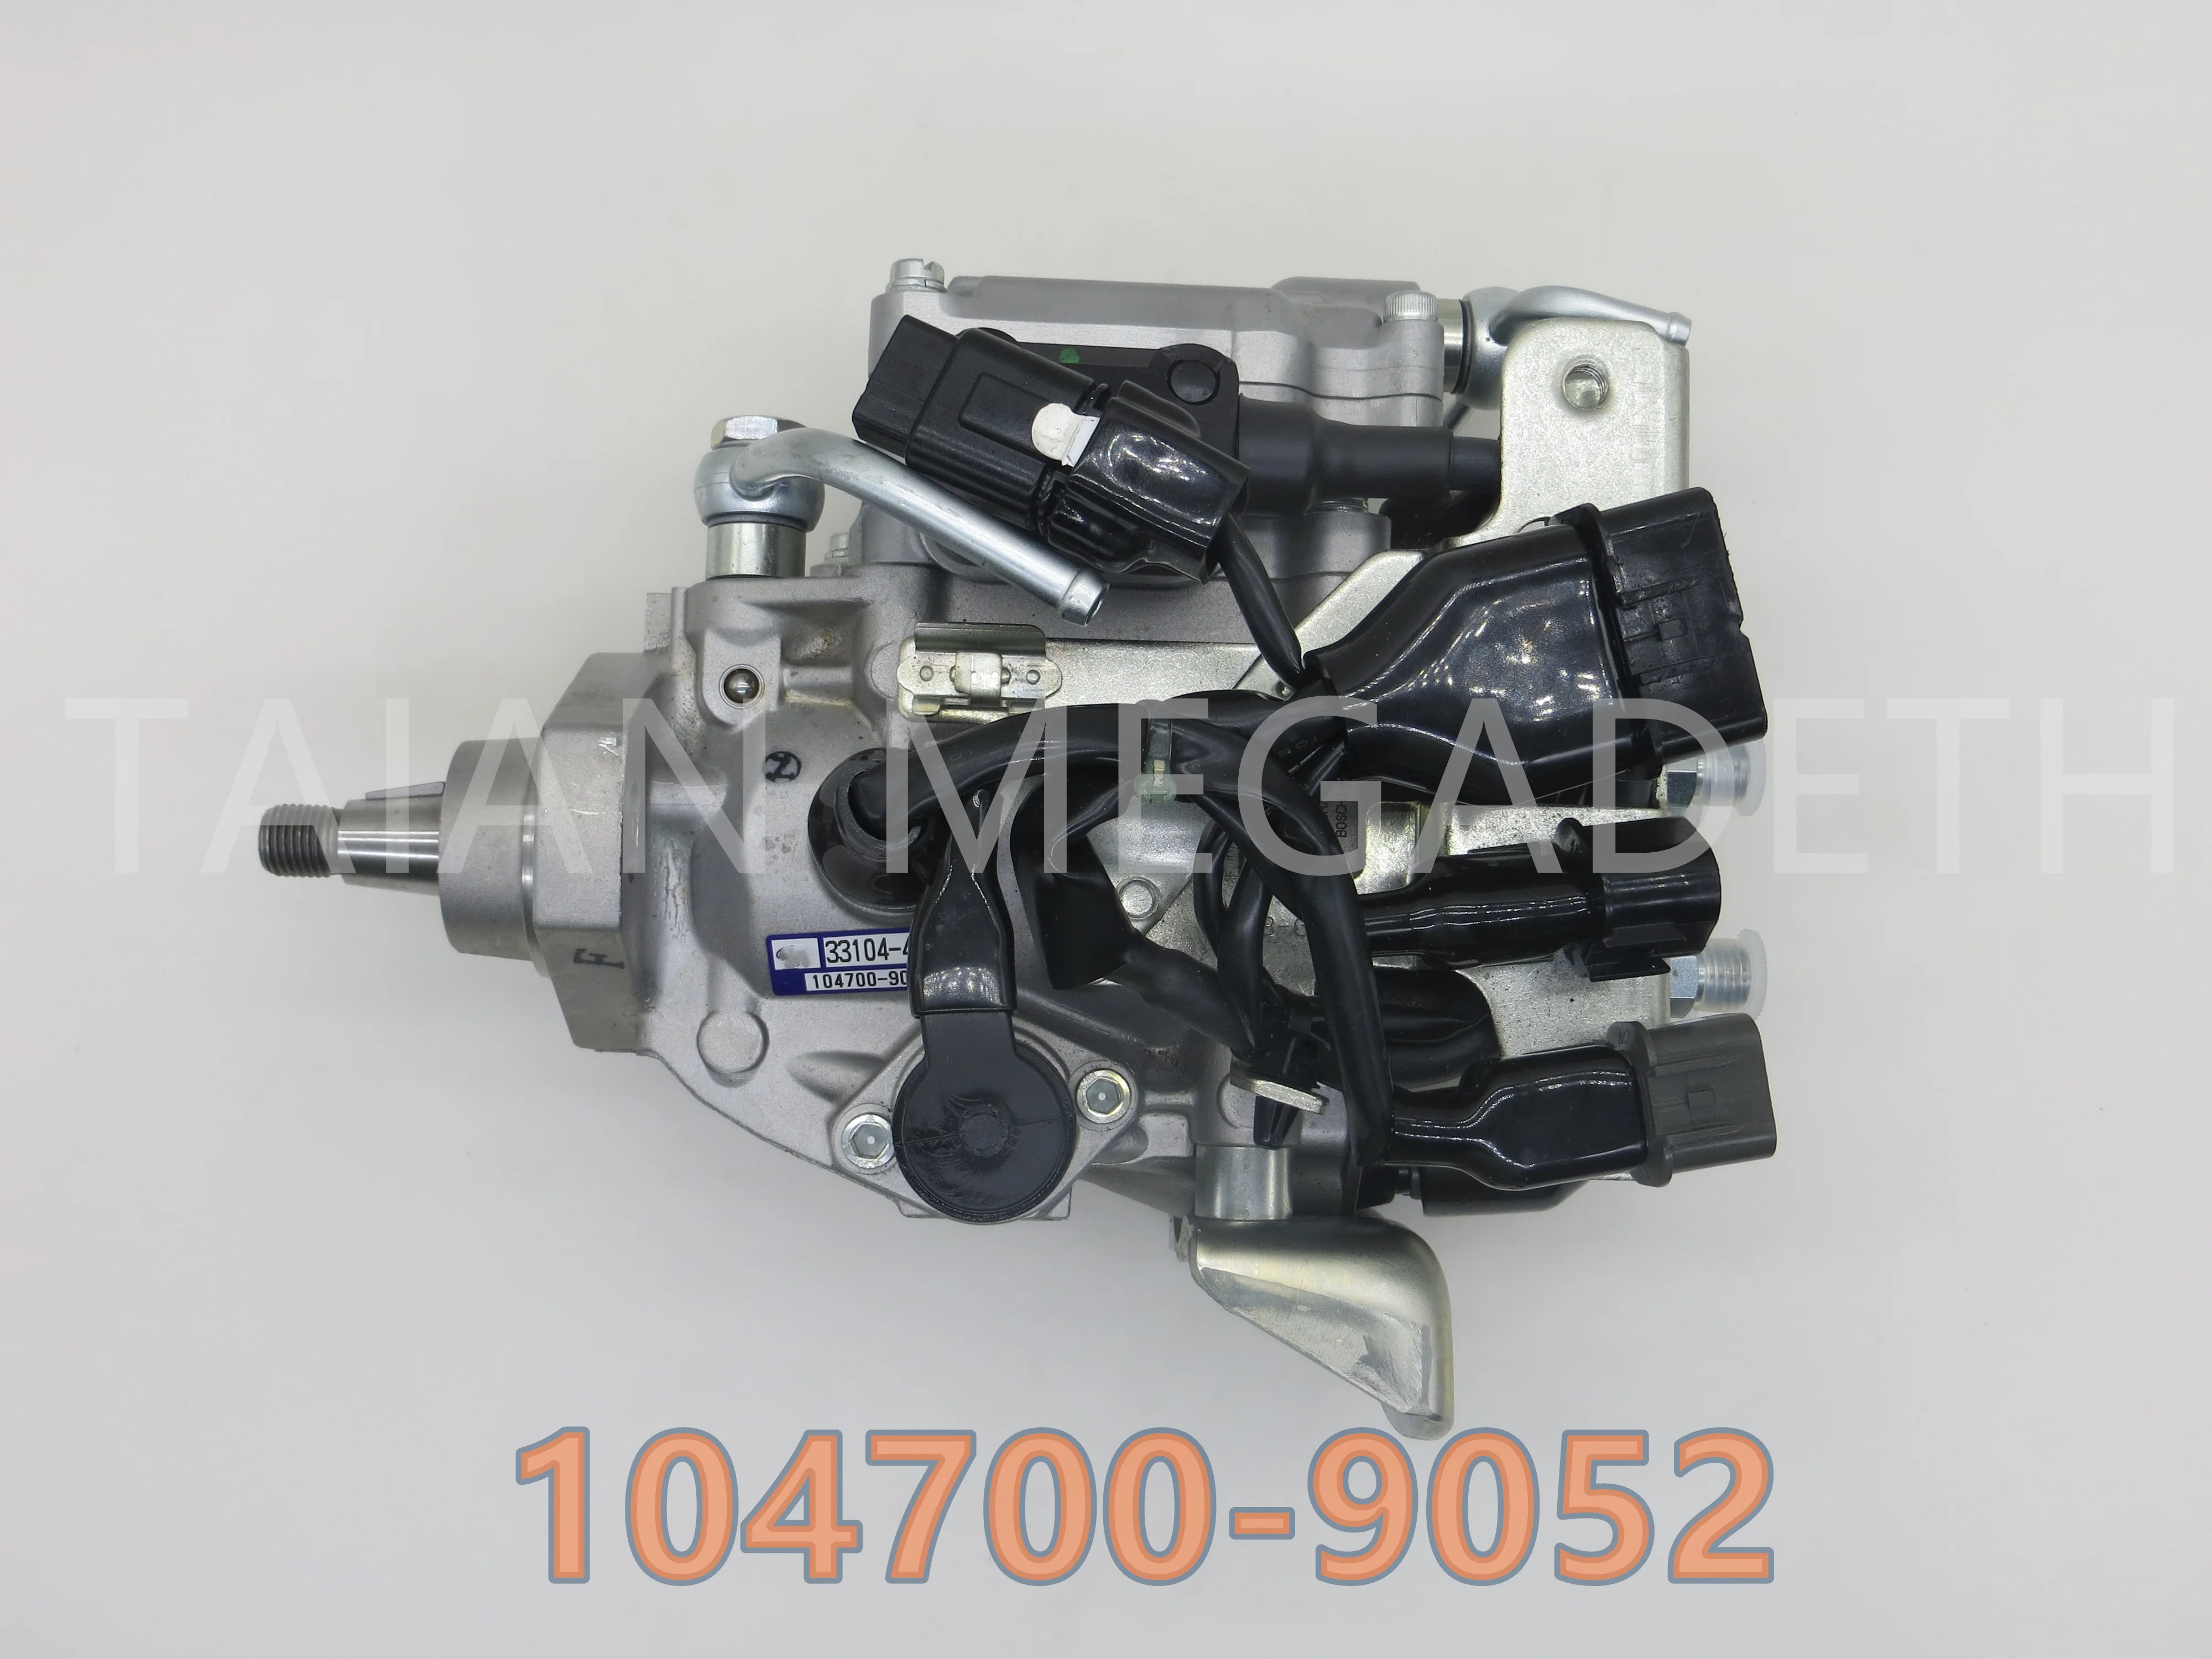 

Genuine New Diesel Fuel Injection Pump 33104-42500, 104700-9052